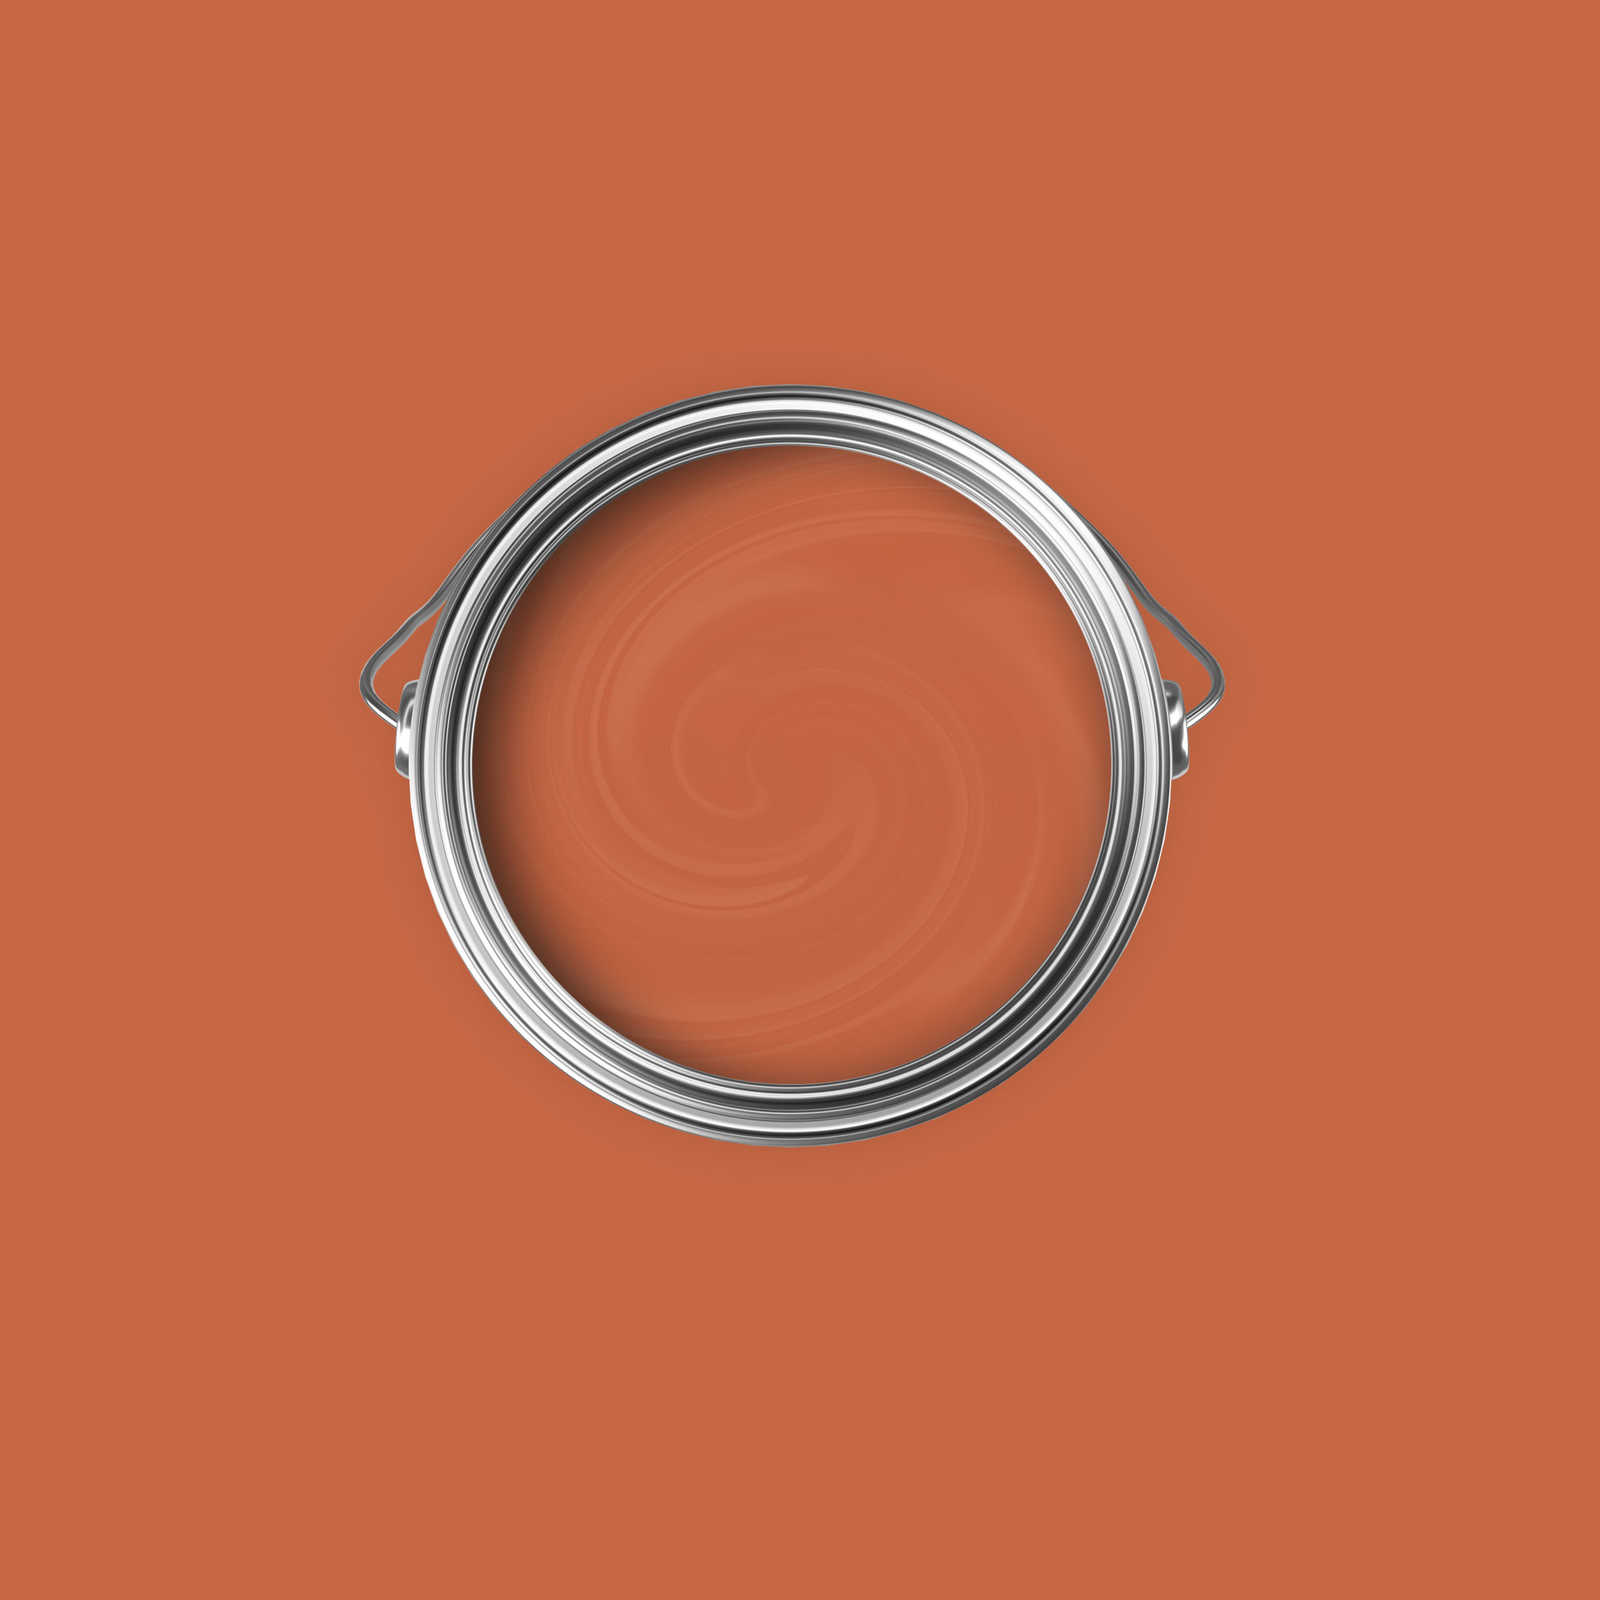             Premium Wall Paint Passionate Blood Orange »Pretty Peach« NW906 – 2.5 litre
        